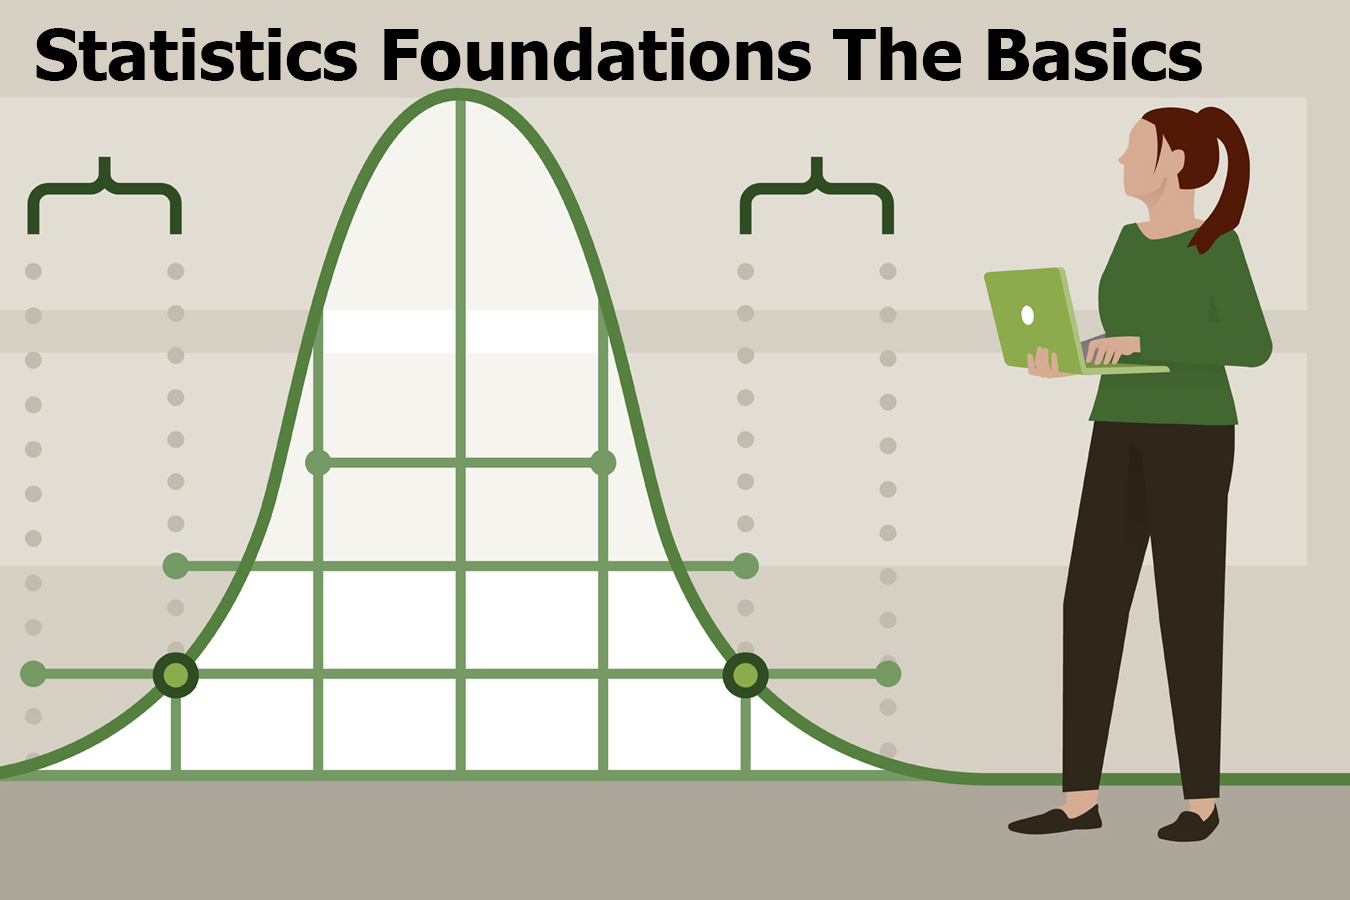 Statistics Foundations The Basics